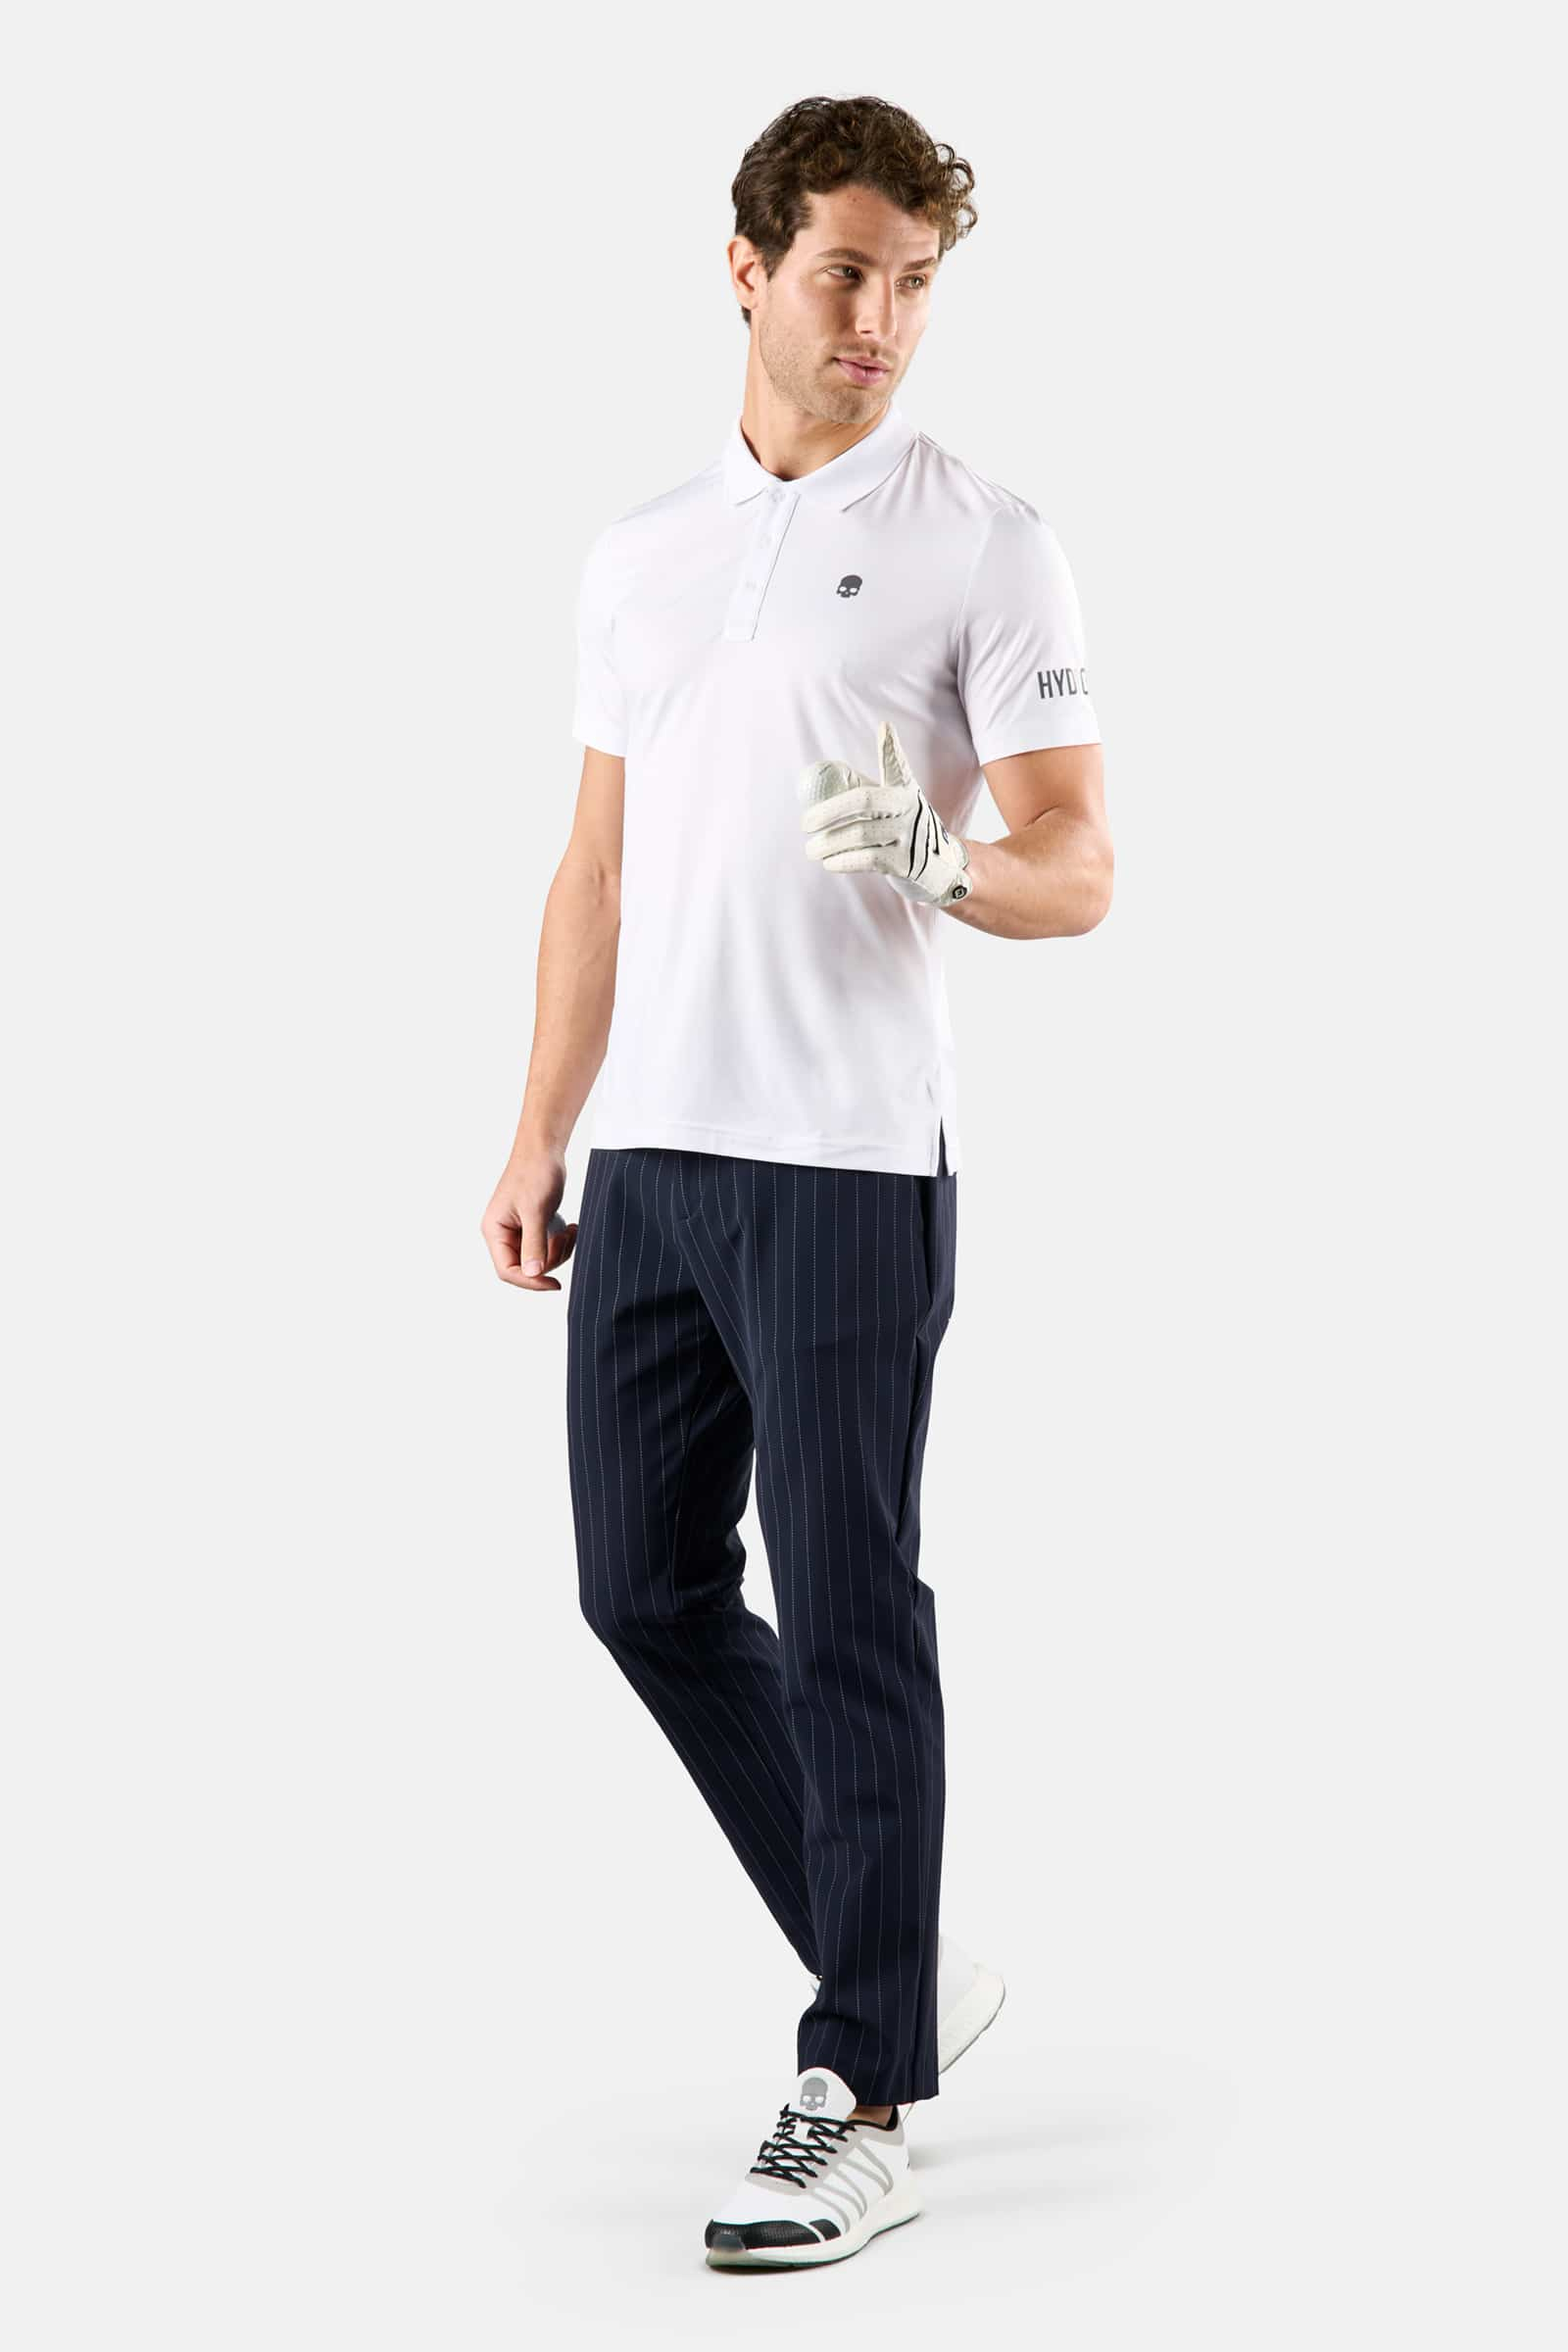 BASIC GOLF POLO - WHITE - Hydrogen - Luxury Sportwear